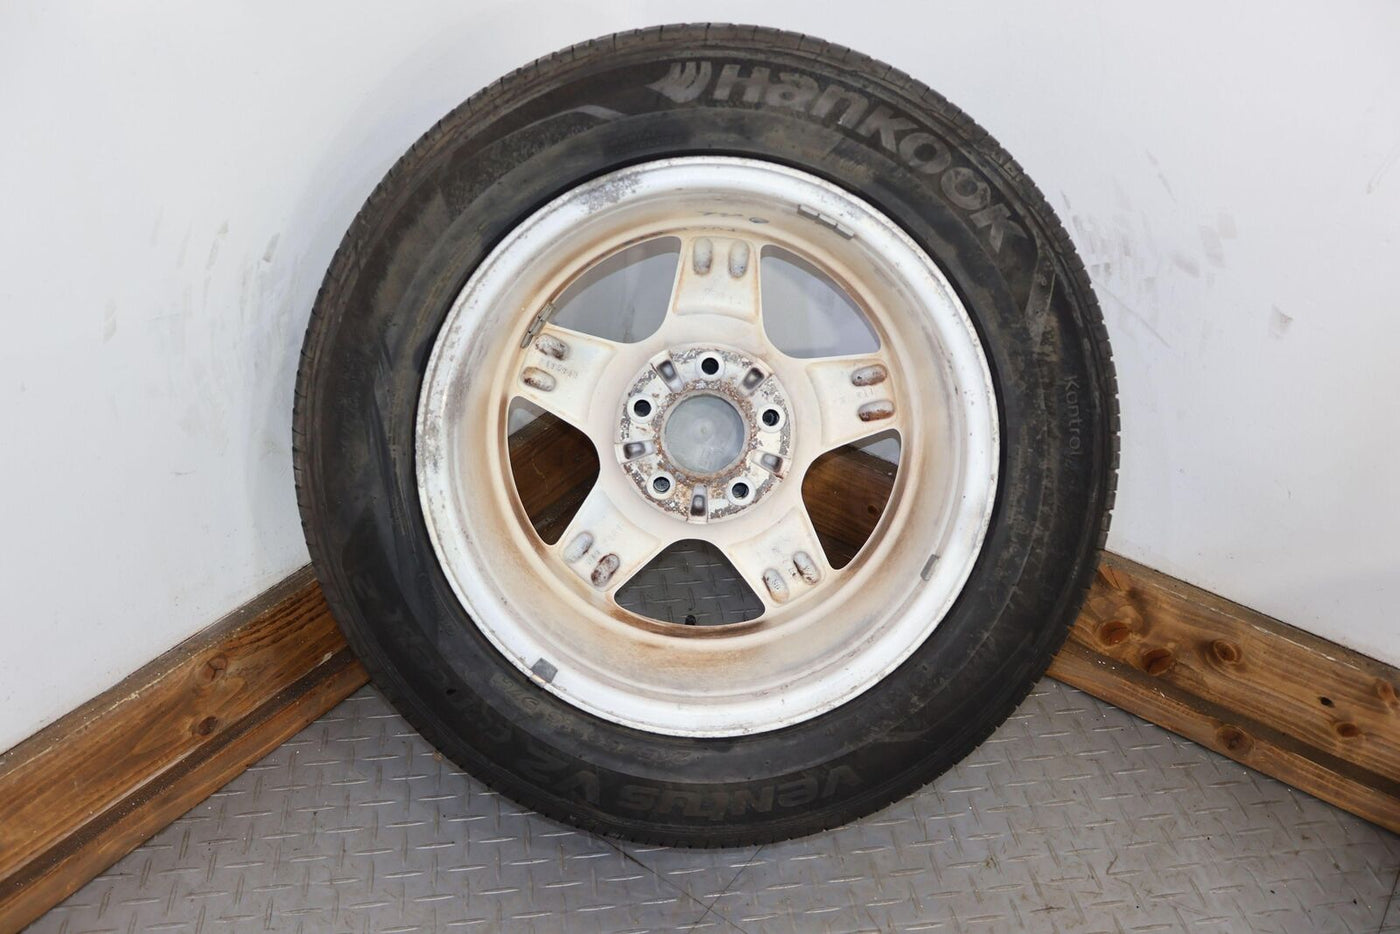 97-99 Chevy Camaro 30th Anniversary 16x8 White Wheels W/ Hankook Tires Set of 4